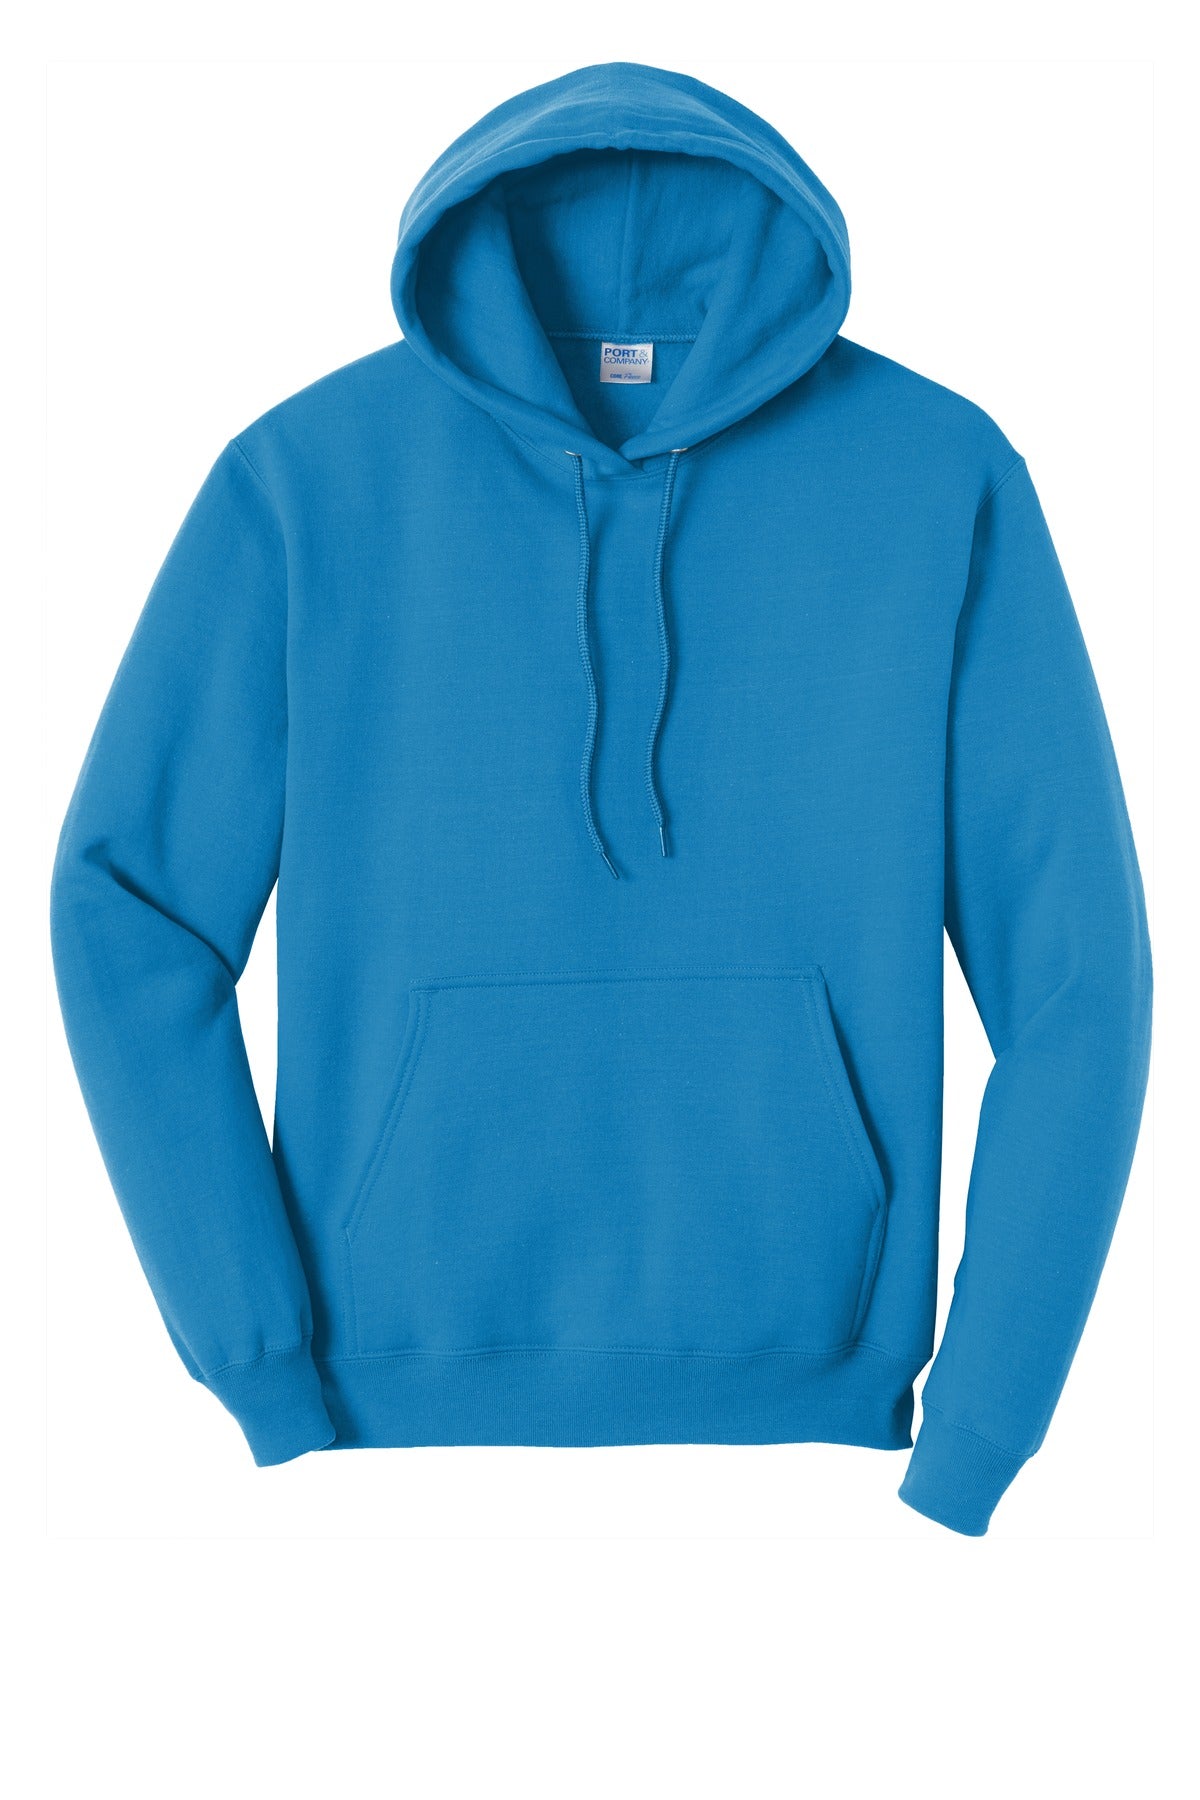 Port & Company - Core Fleece Pullover Hooded Sweatshirt. PC78H